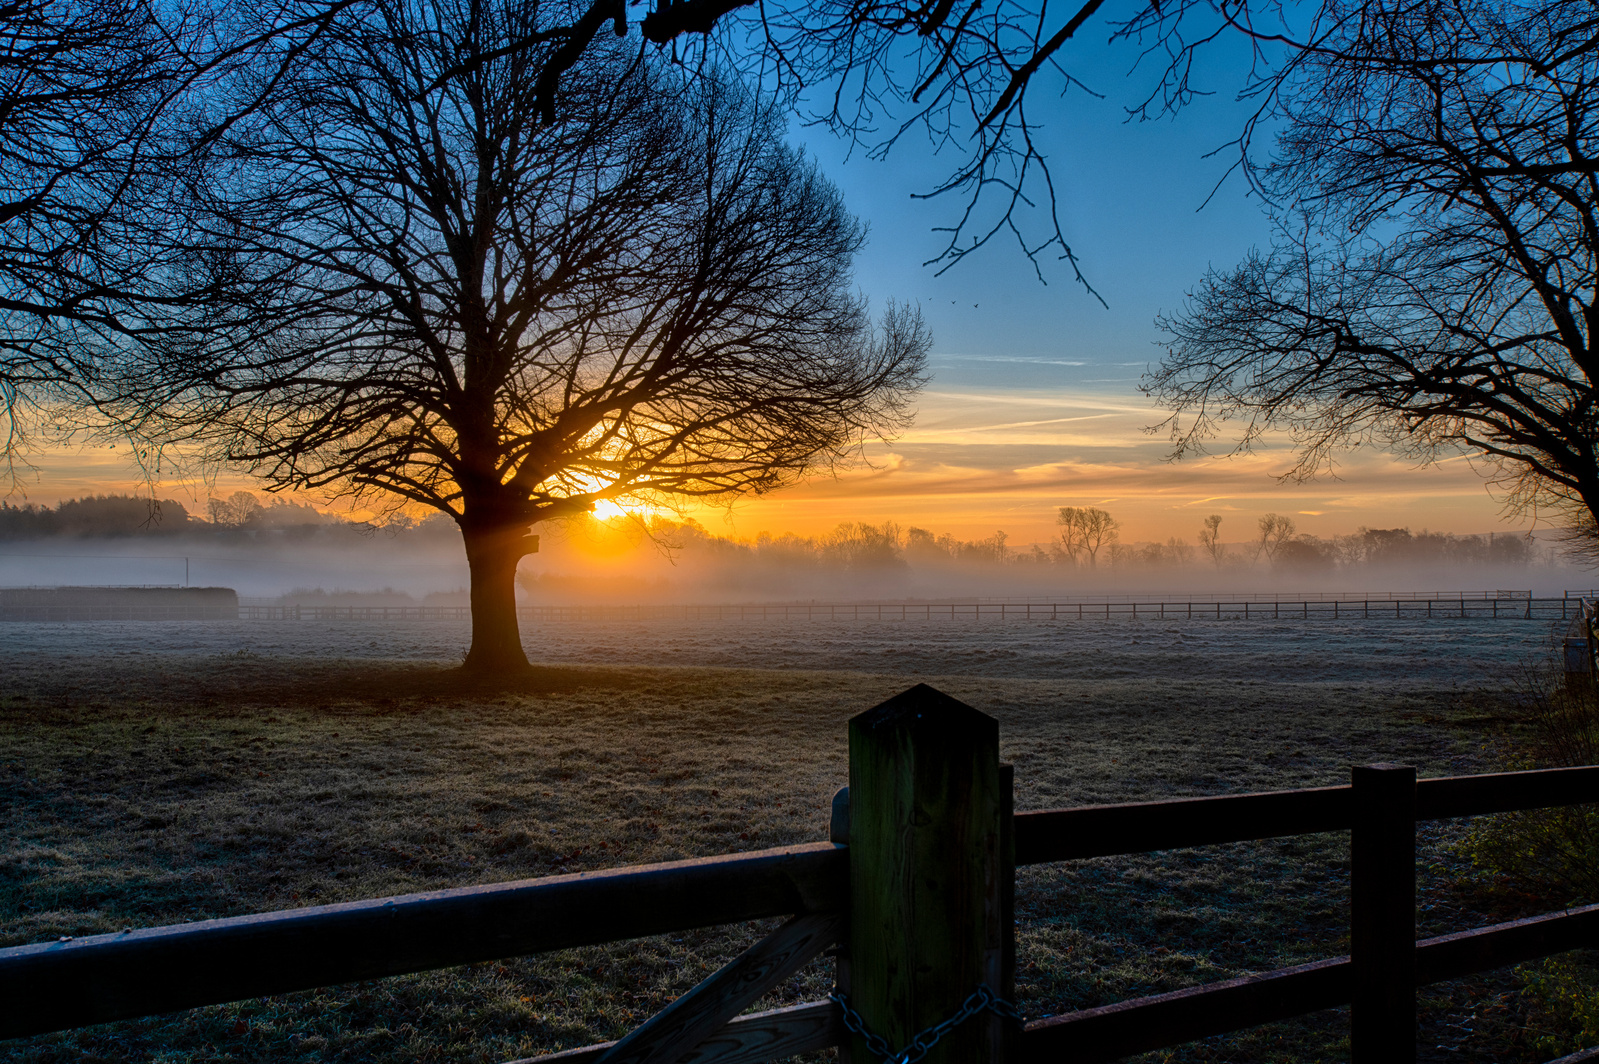 Sunrise on the farm, Little Coxwell, Oxfordshire.